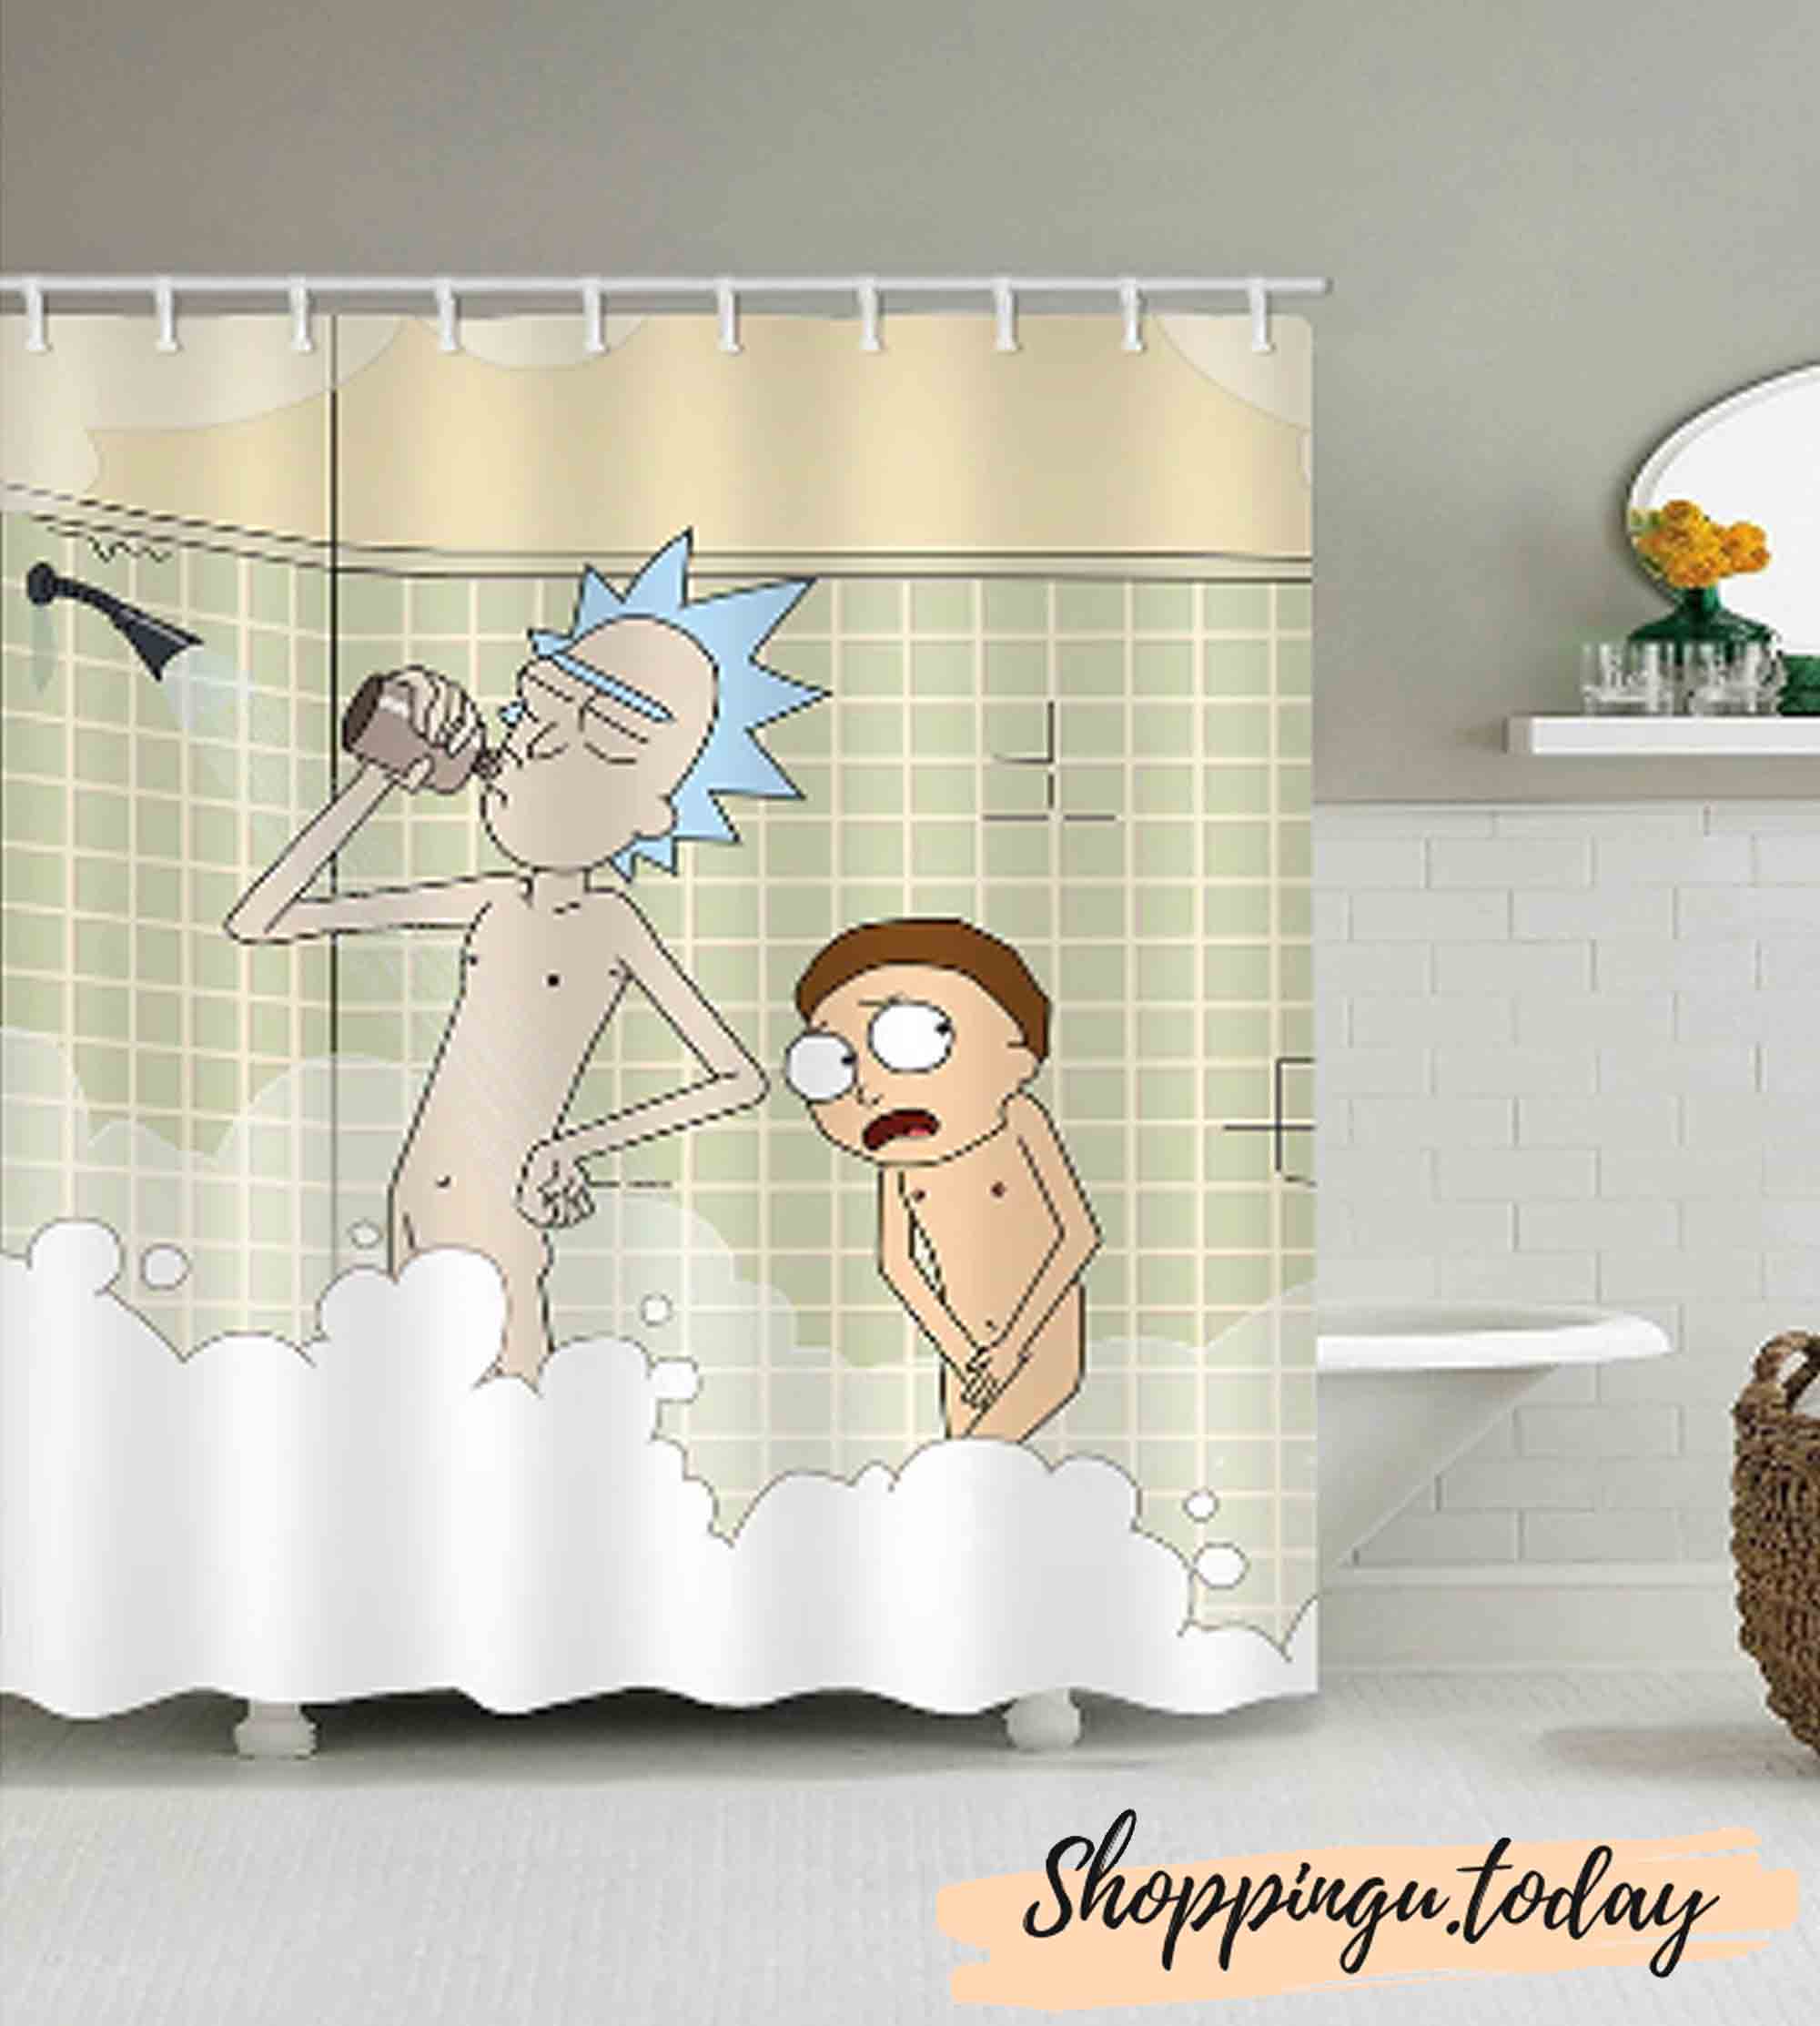 Morty naked